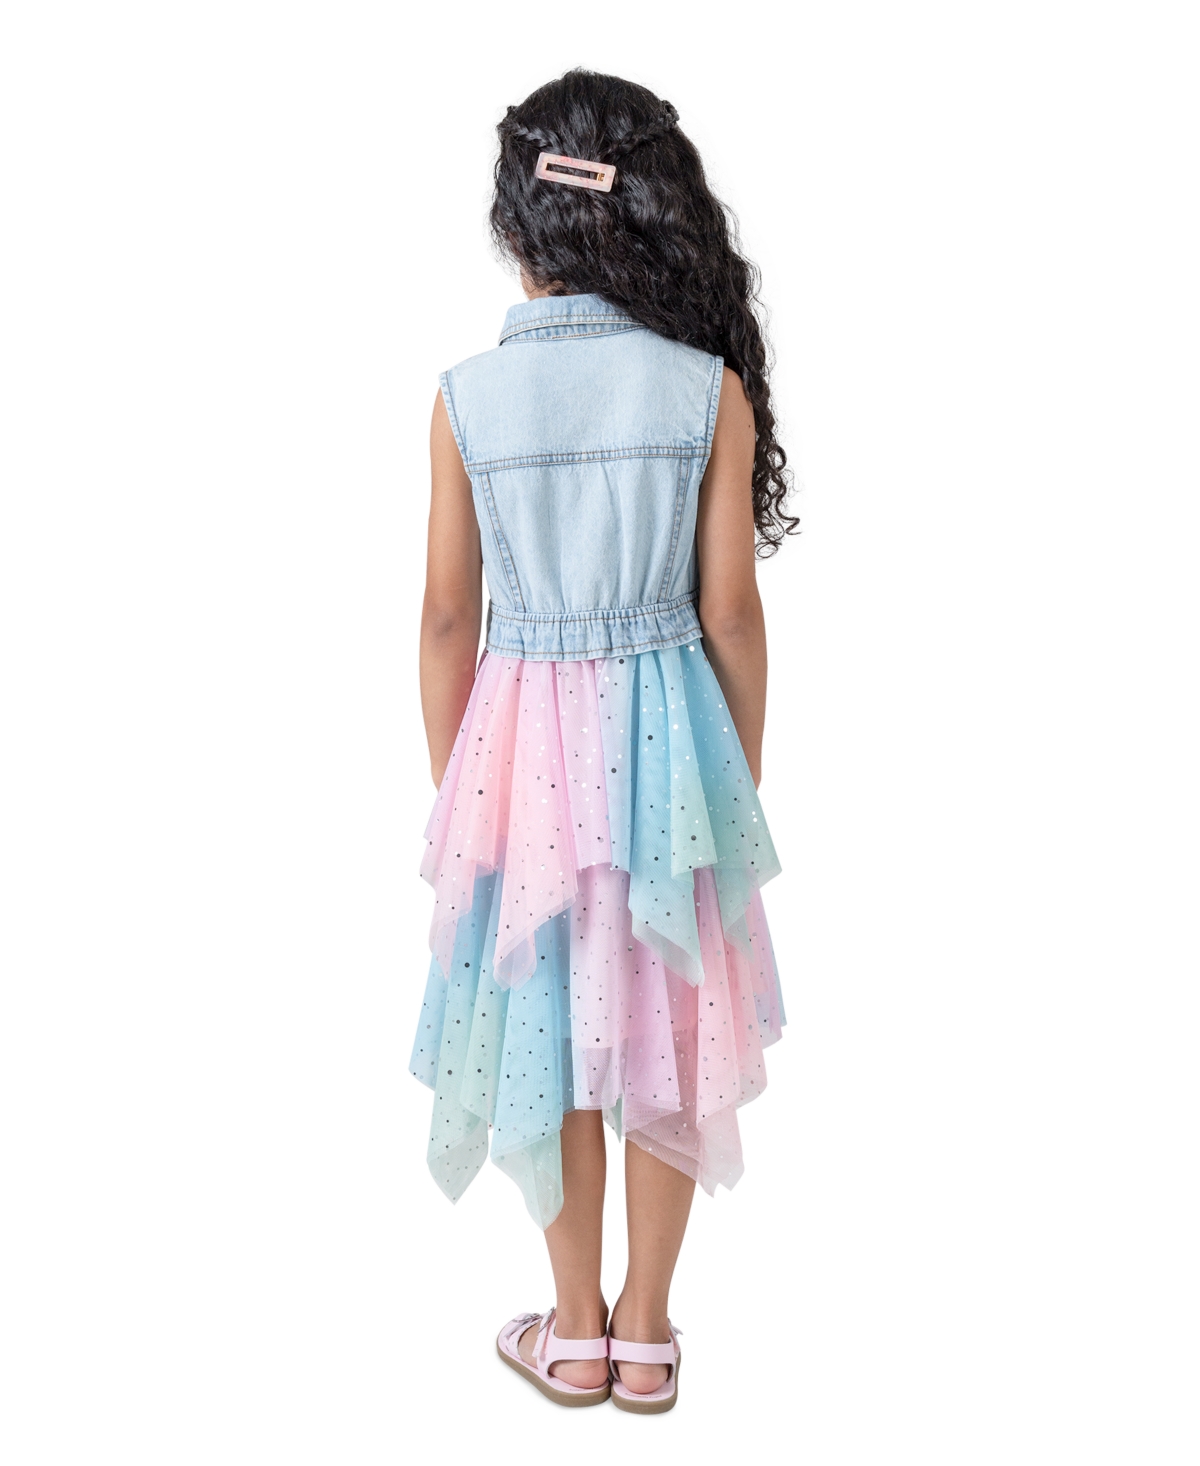 Shop Rare Editions Toddler & Little Girls Denim Vest Topper Dress In Chambray